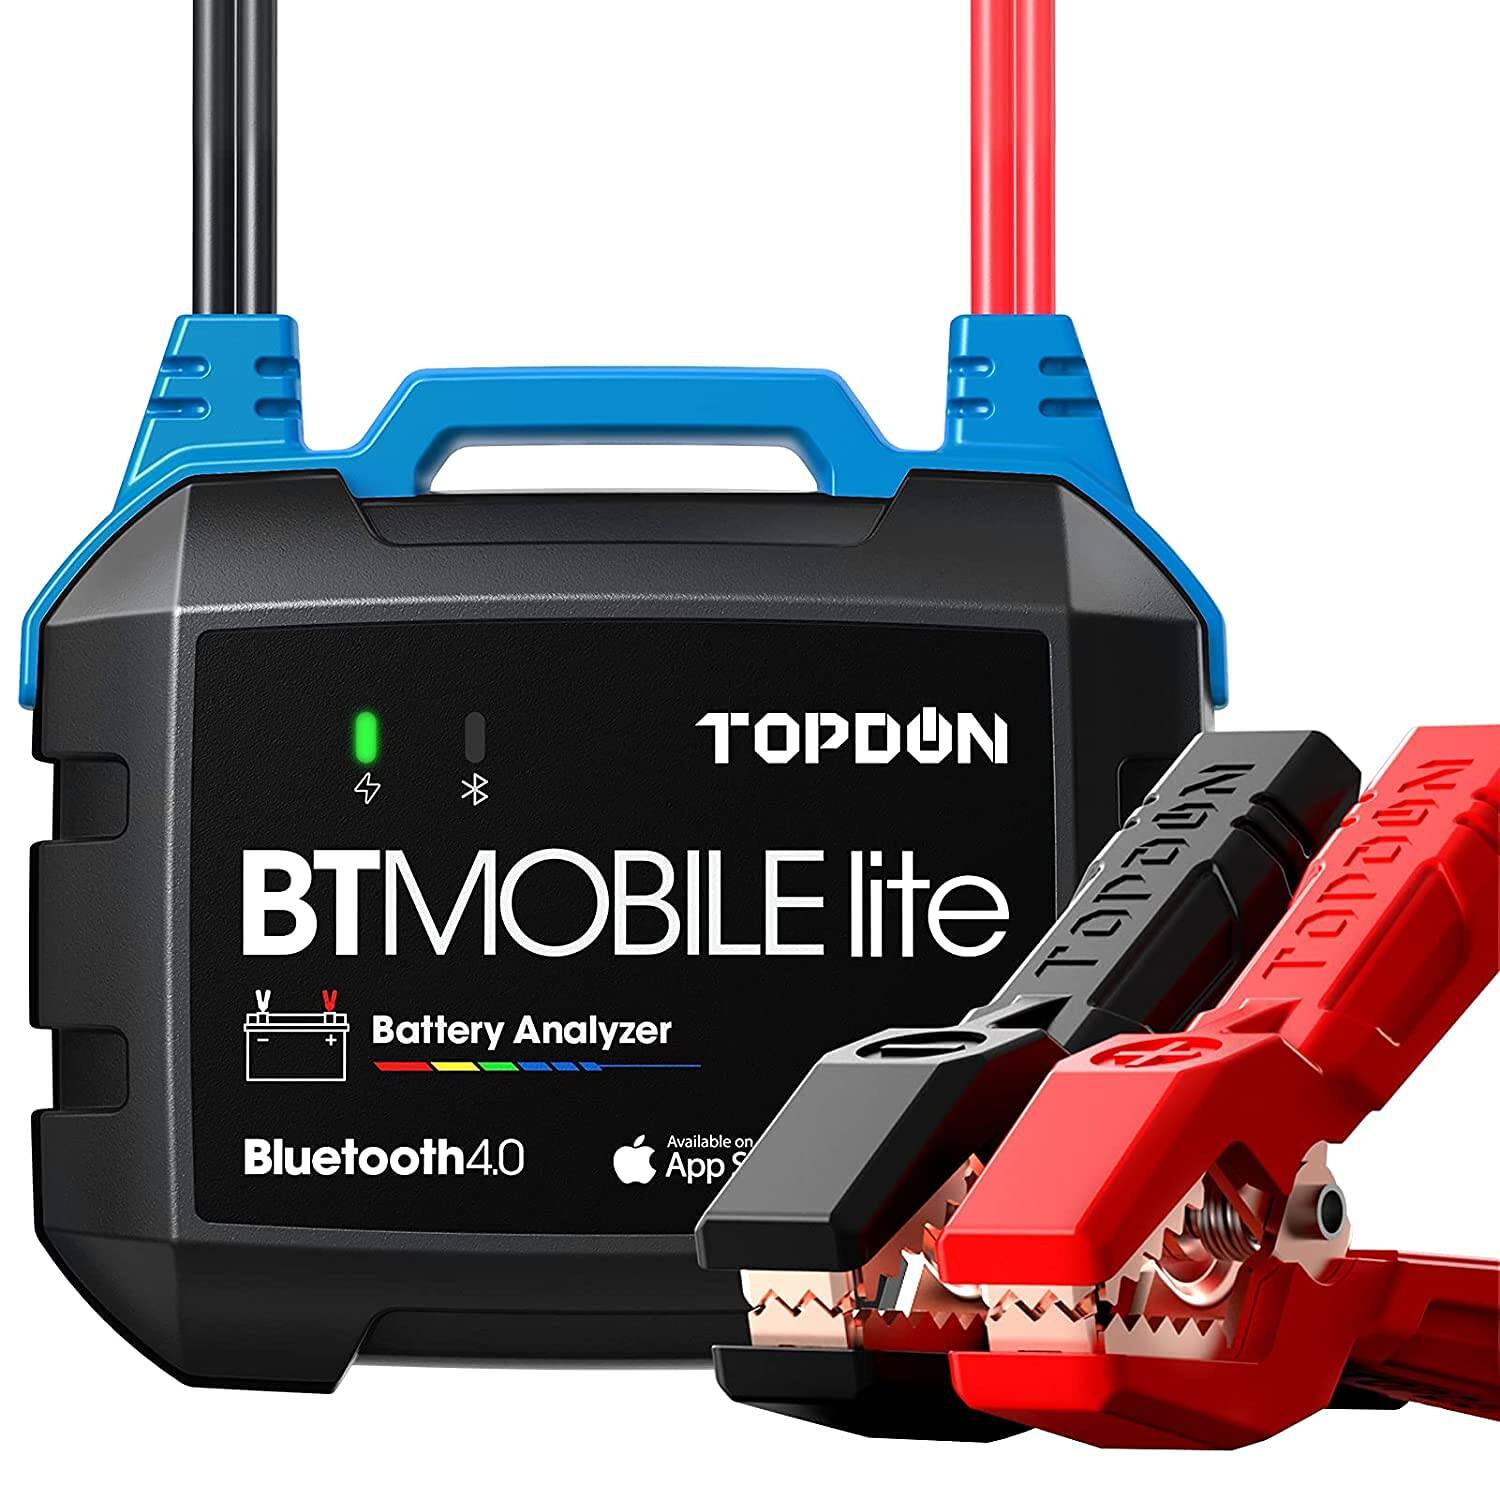 TOPDON BT Mobile Lite Wireless 12V Car Battery Load Tester -$24.99 + Free Shipping